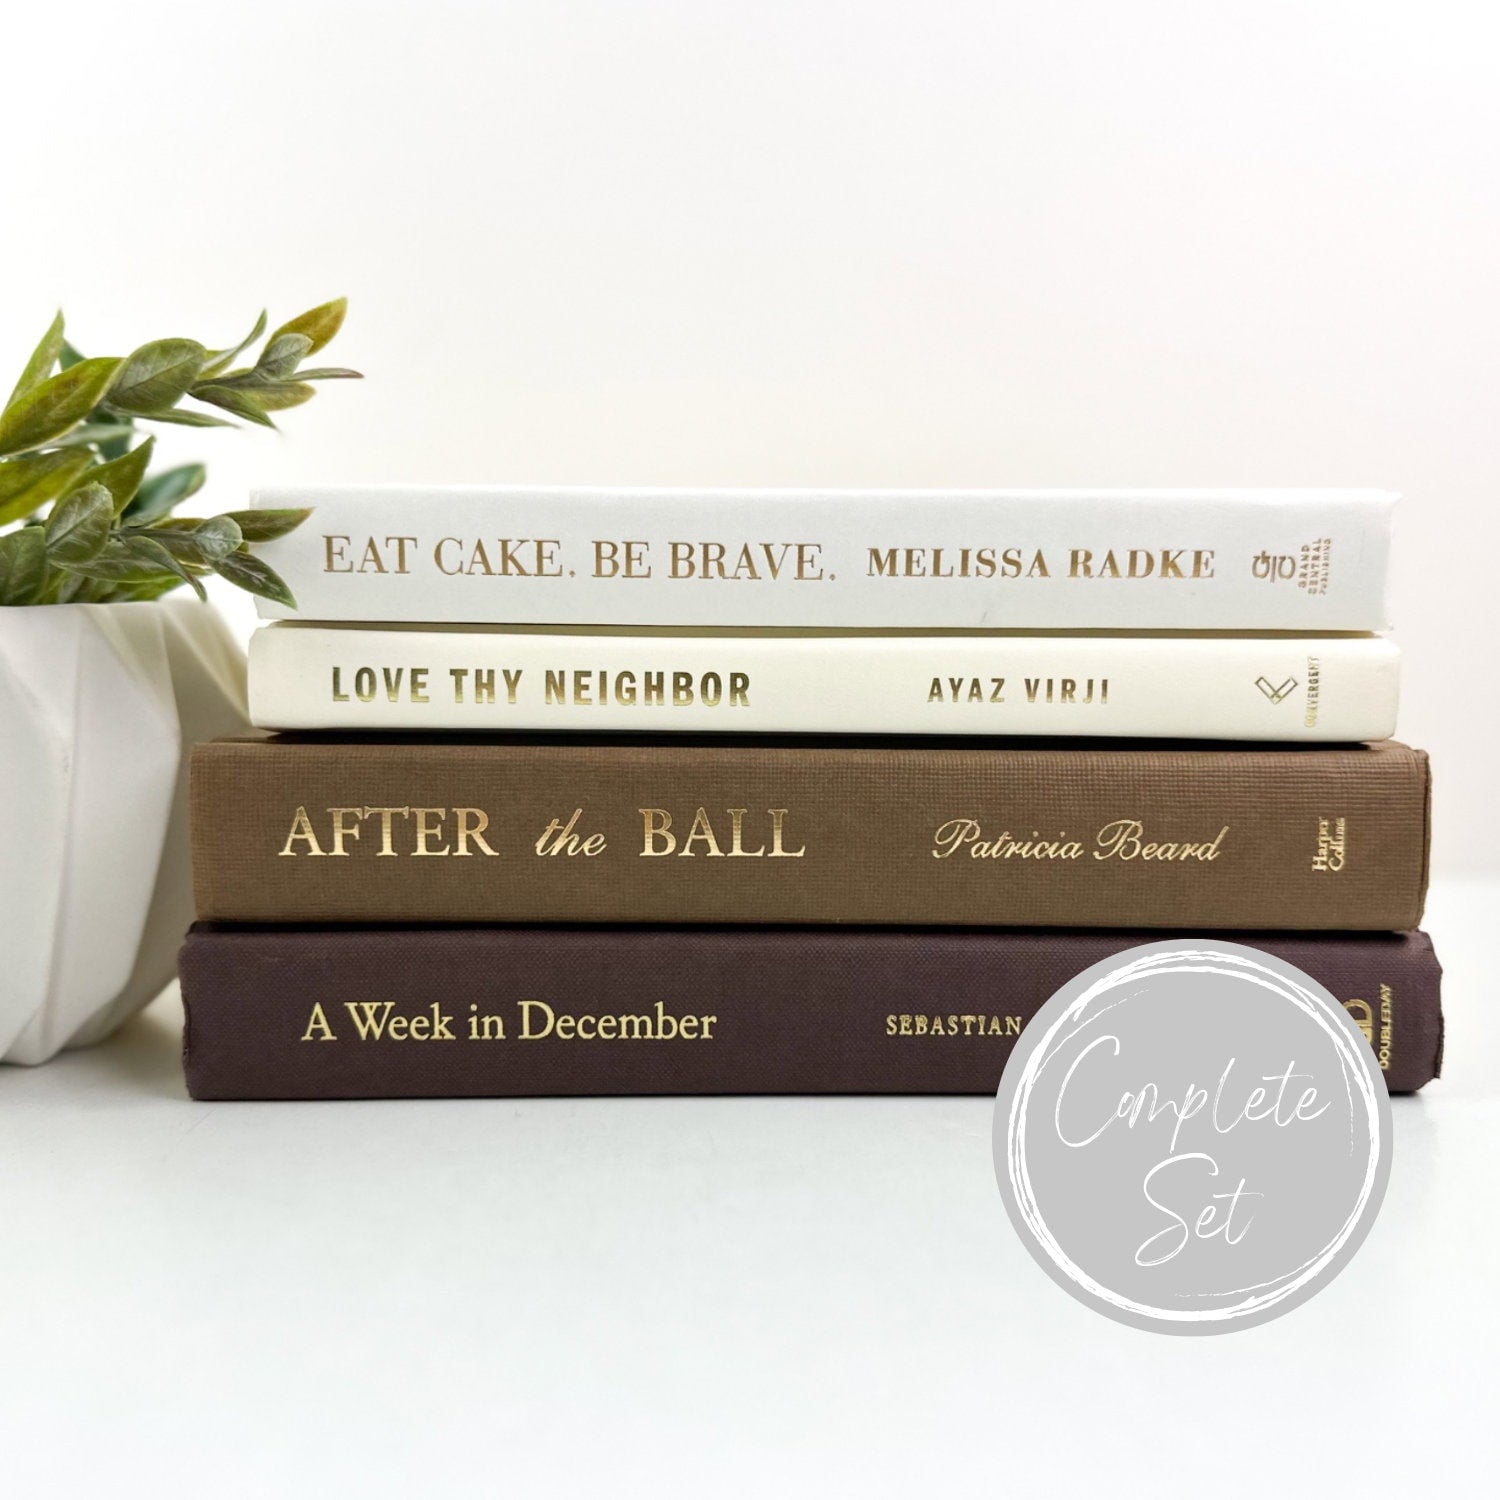 Decorative Book Sets, Coffee Table Books, Designer and Fashion books